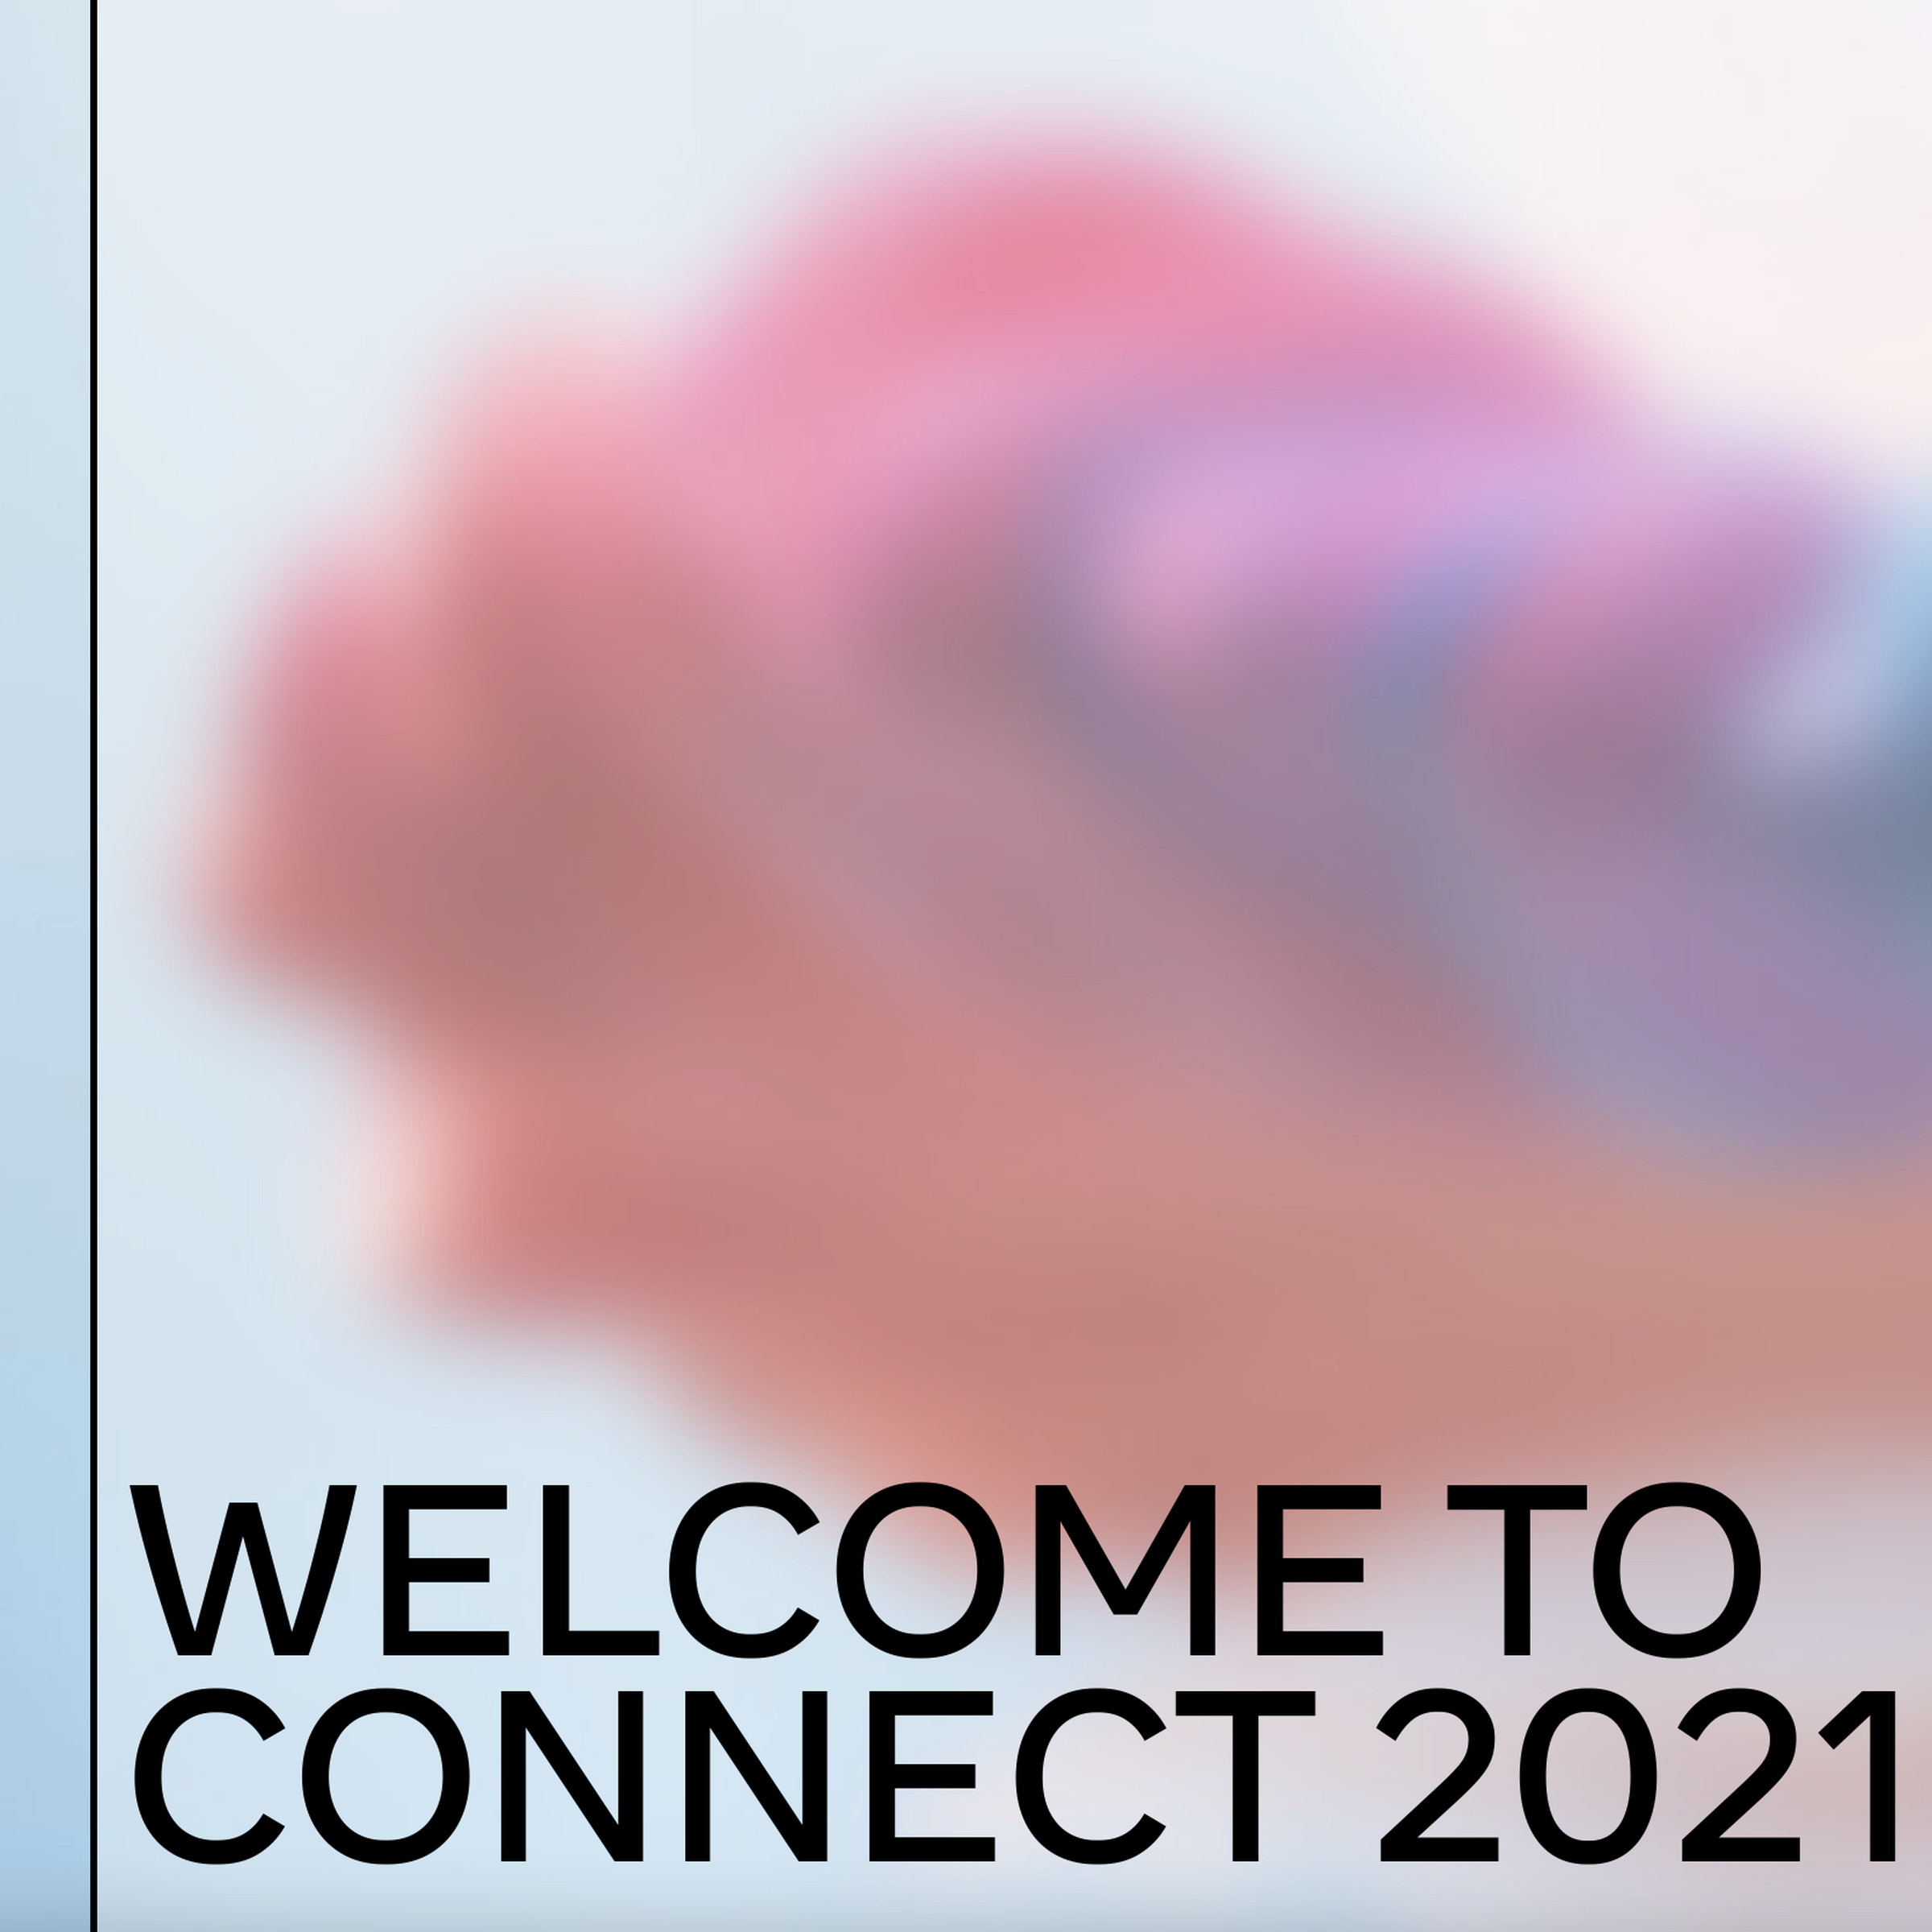 Facebook Connect 2021 event site